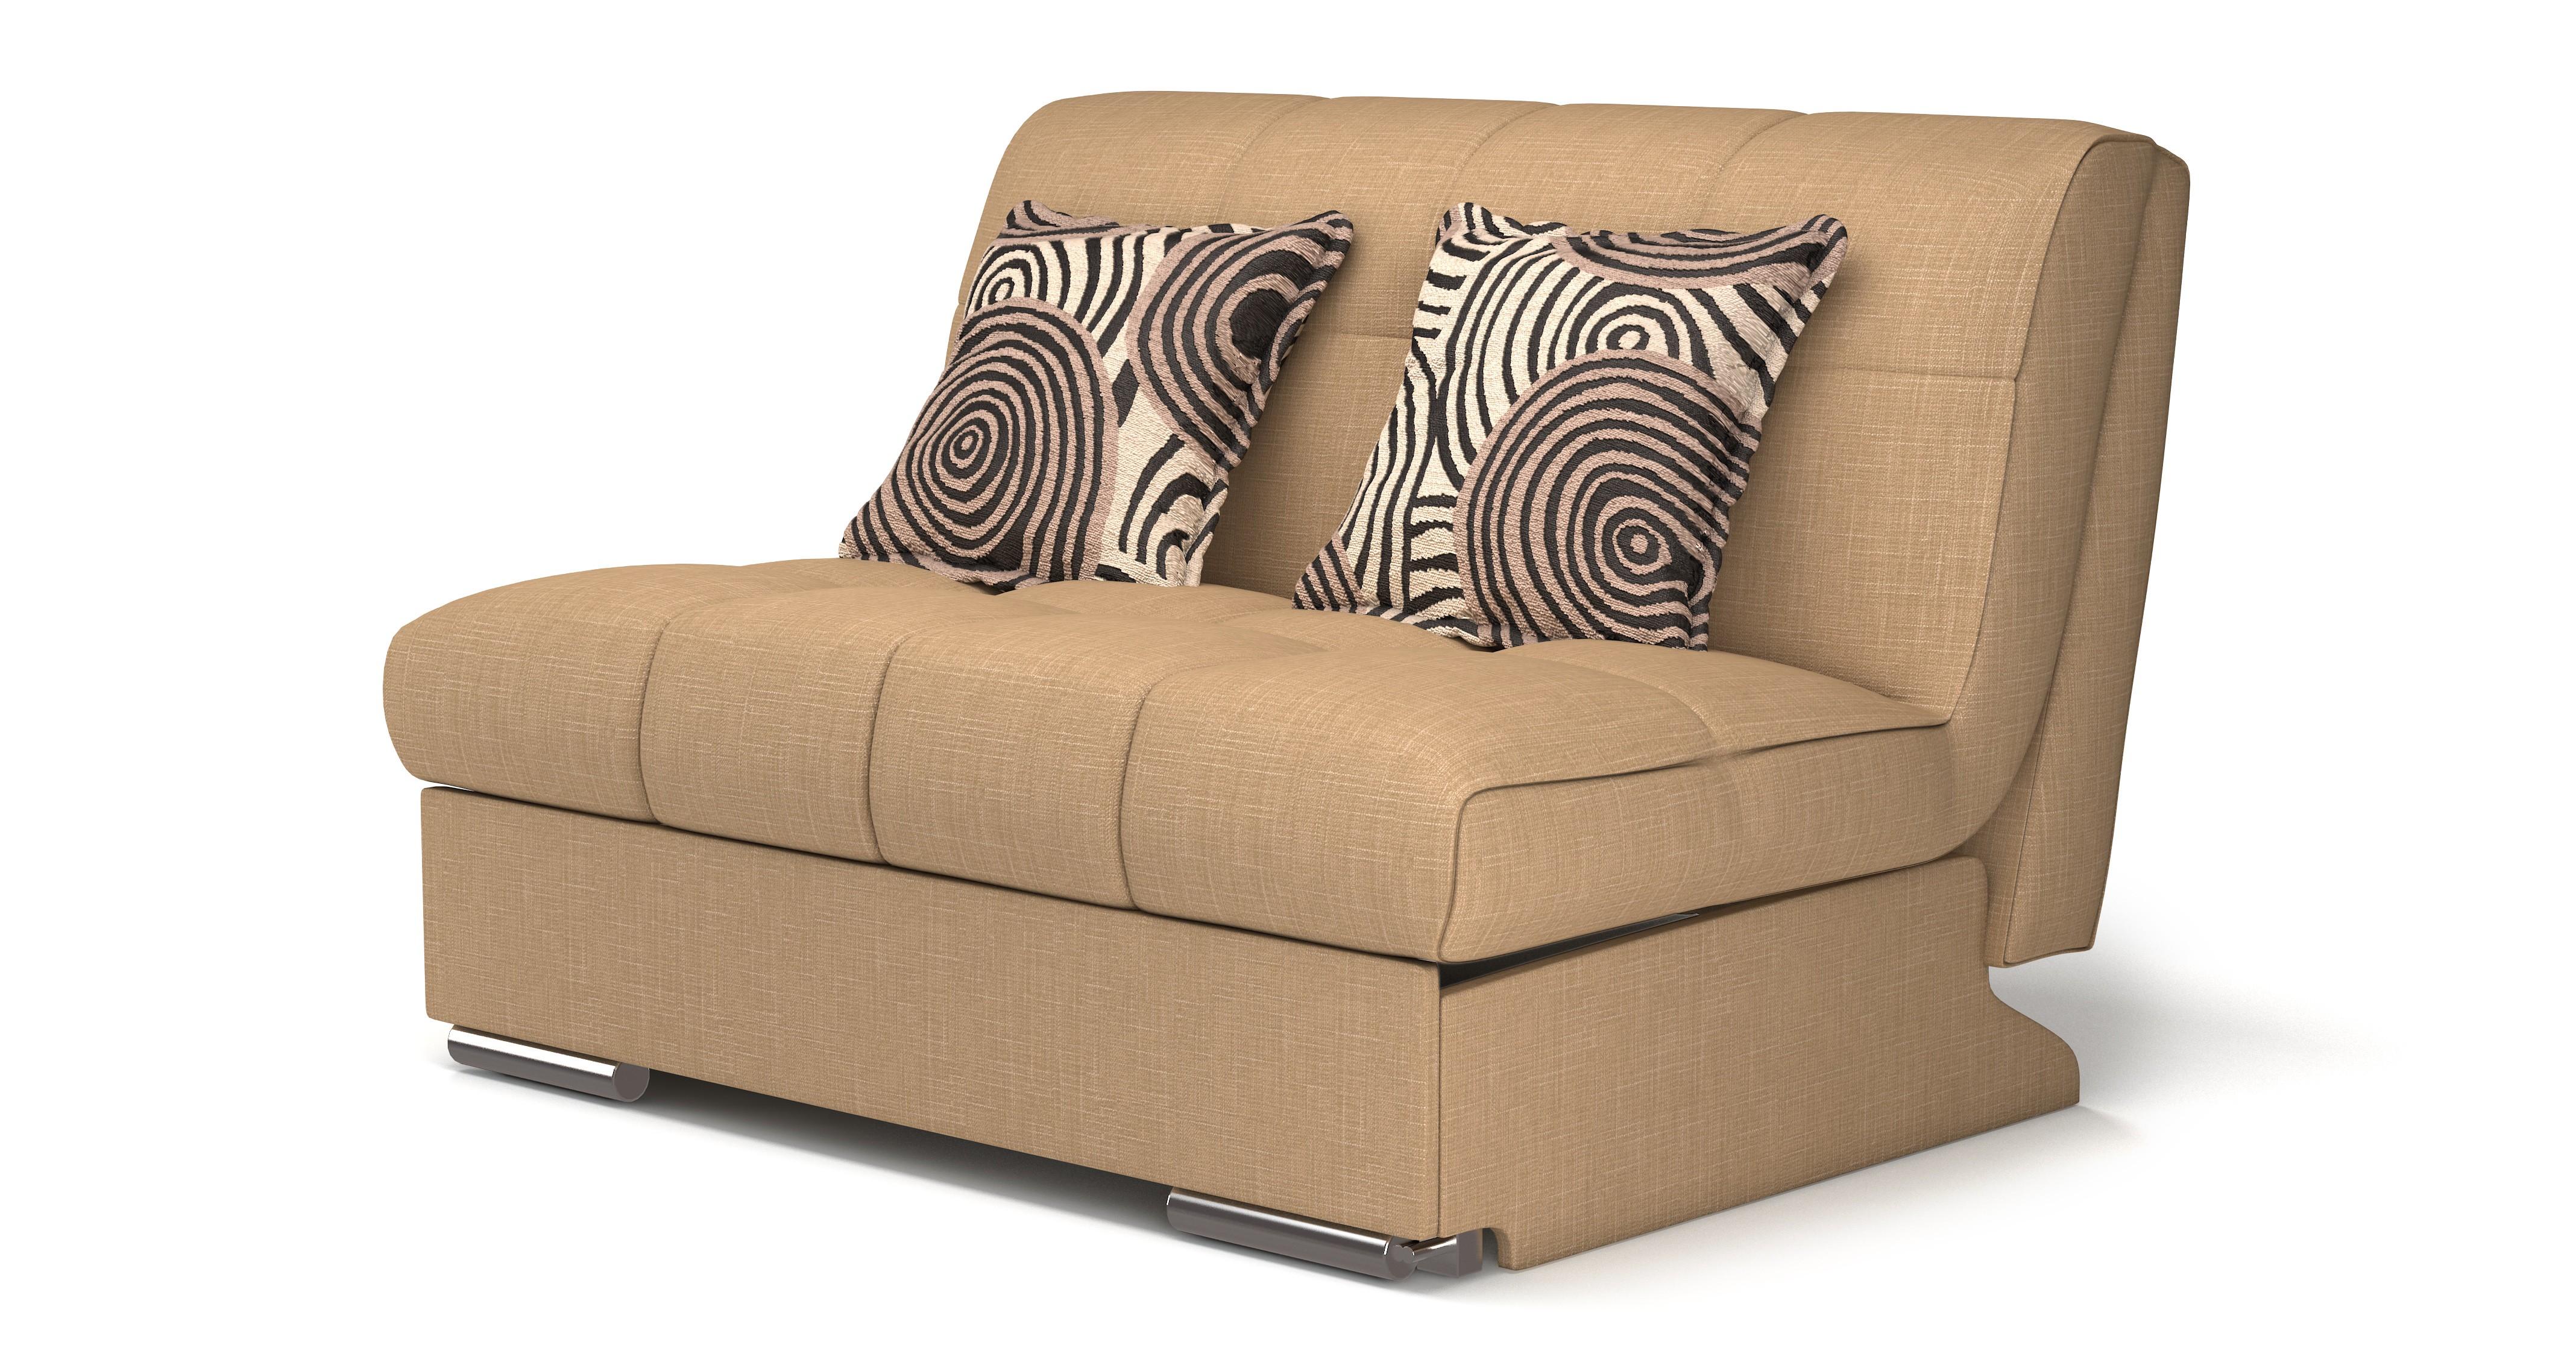 DFS Explore Medium Stone Coloured Sofa Bed | eBay